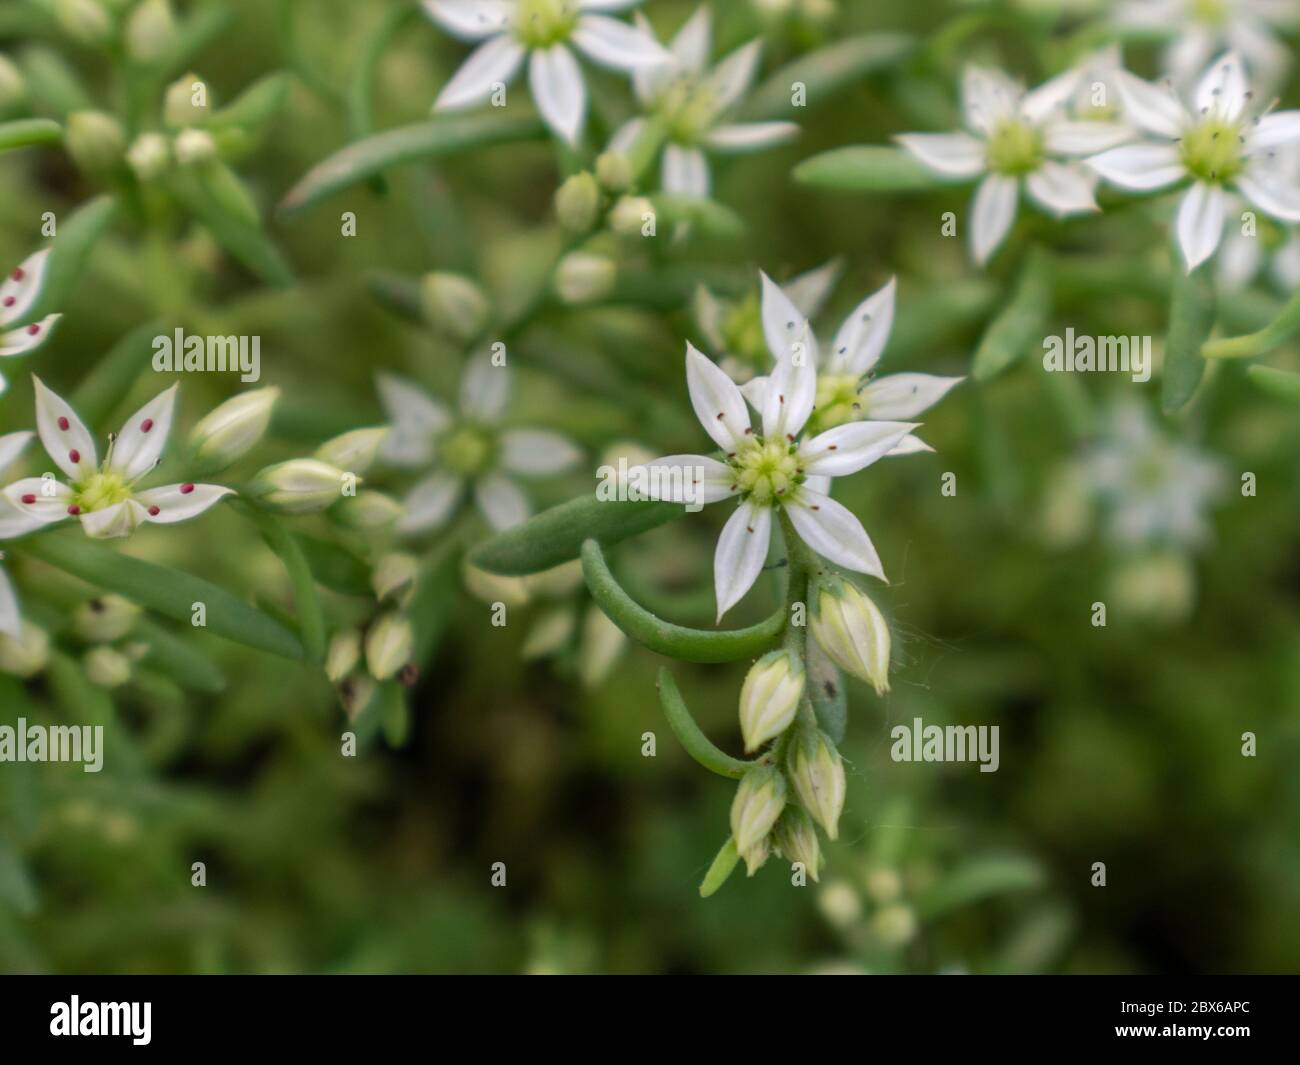 Close up of Spanish stonecrop white flowers in the garden, Sedum hispanicum L Stock Photo